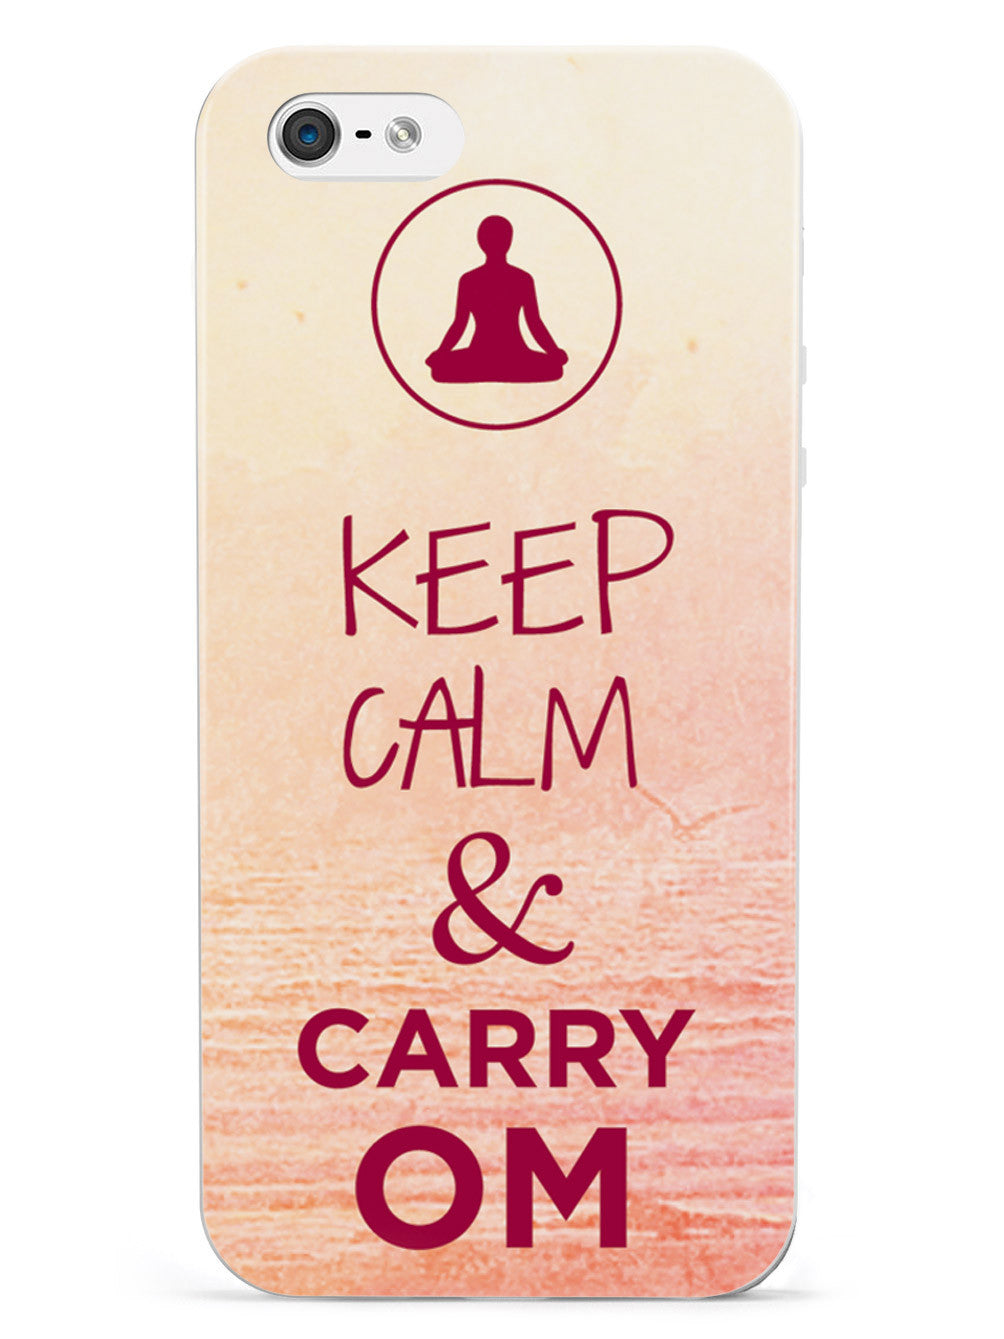 Keep Calm & Carry Om - Yoga Humor Funny Case